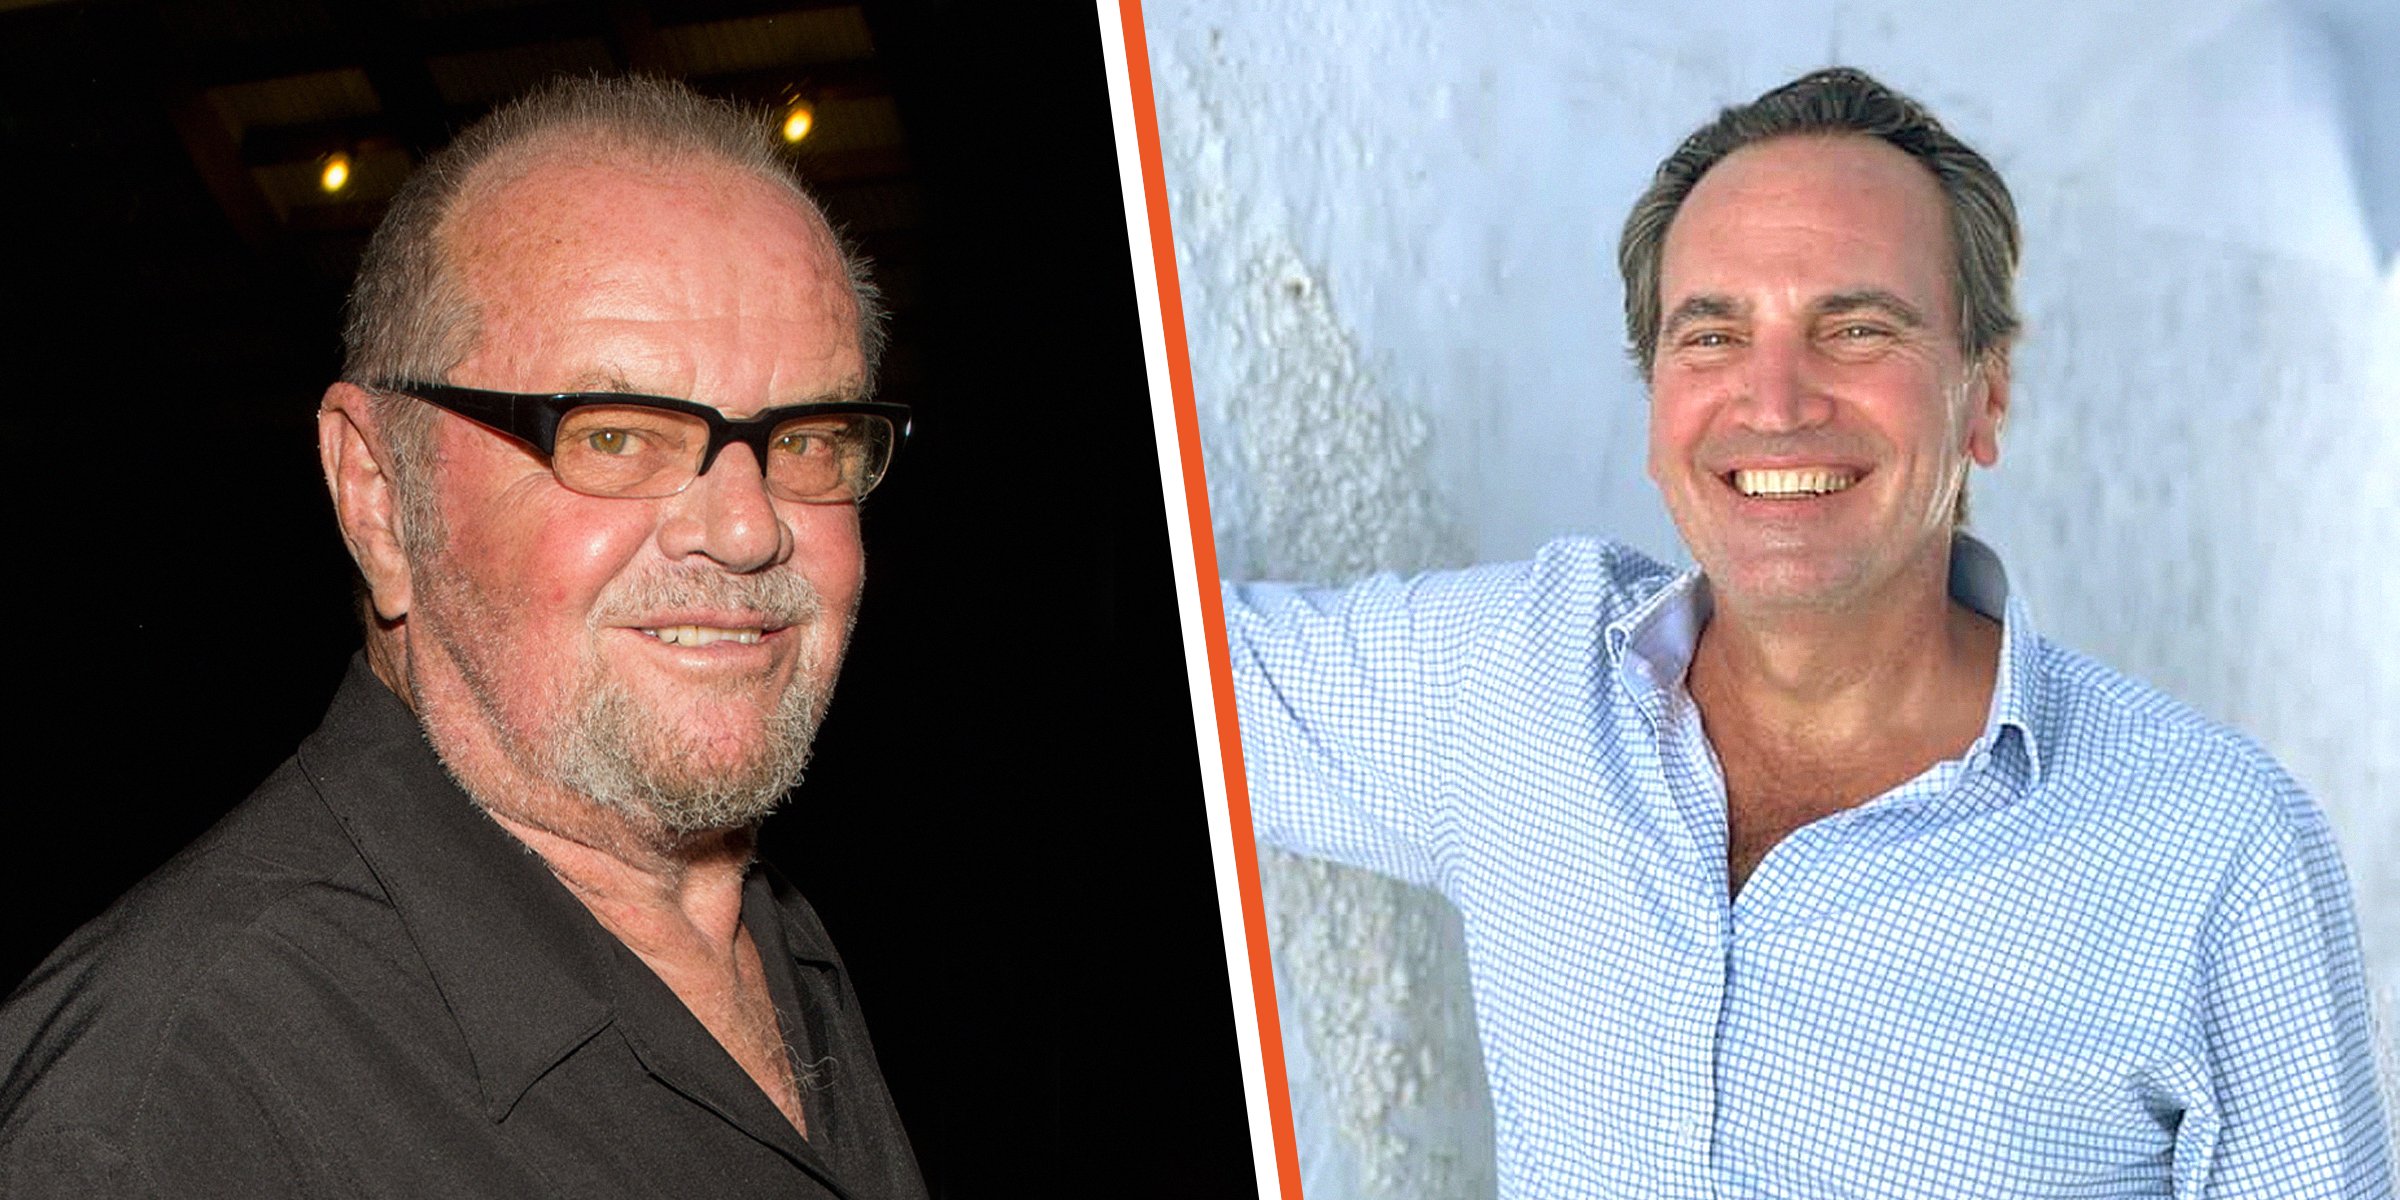 Caleb James Goddard Is a Producer Meet Jack Nicholson's Son He Denied